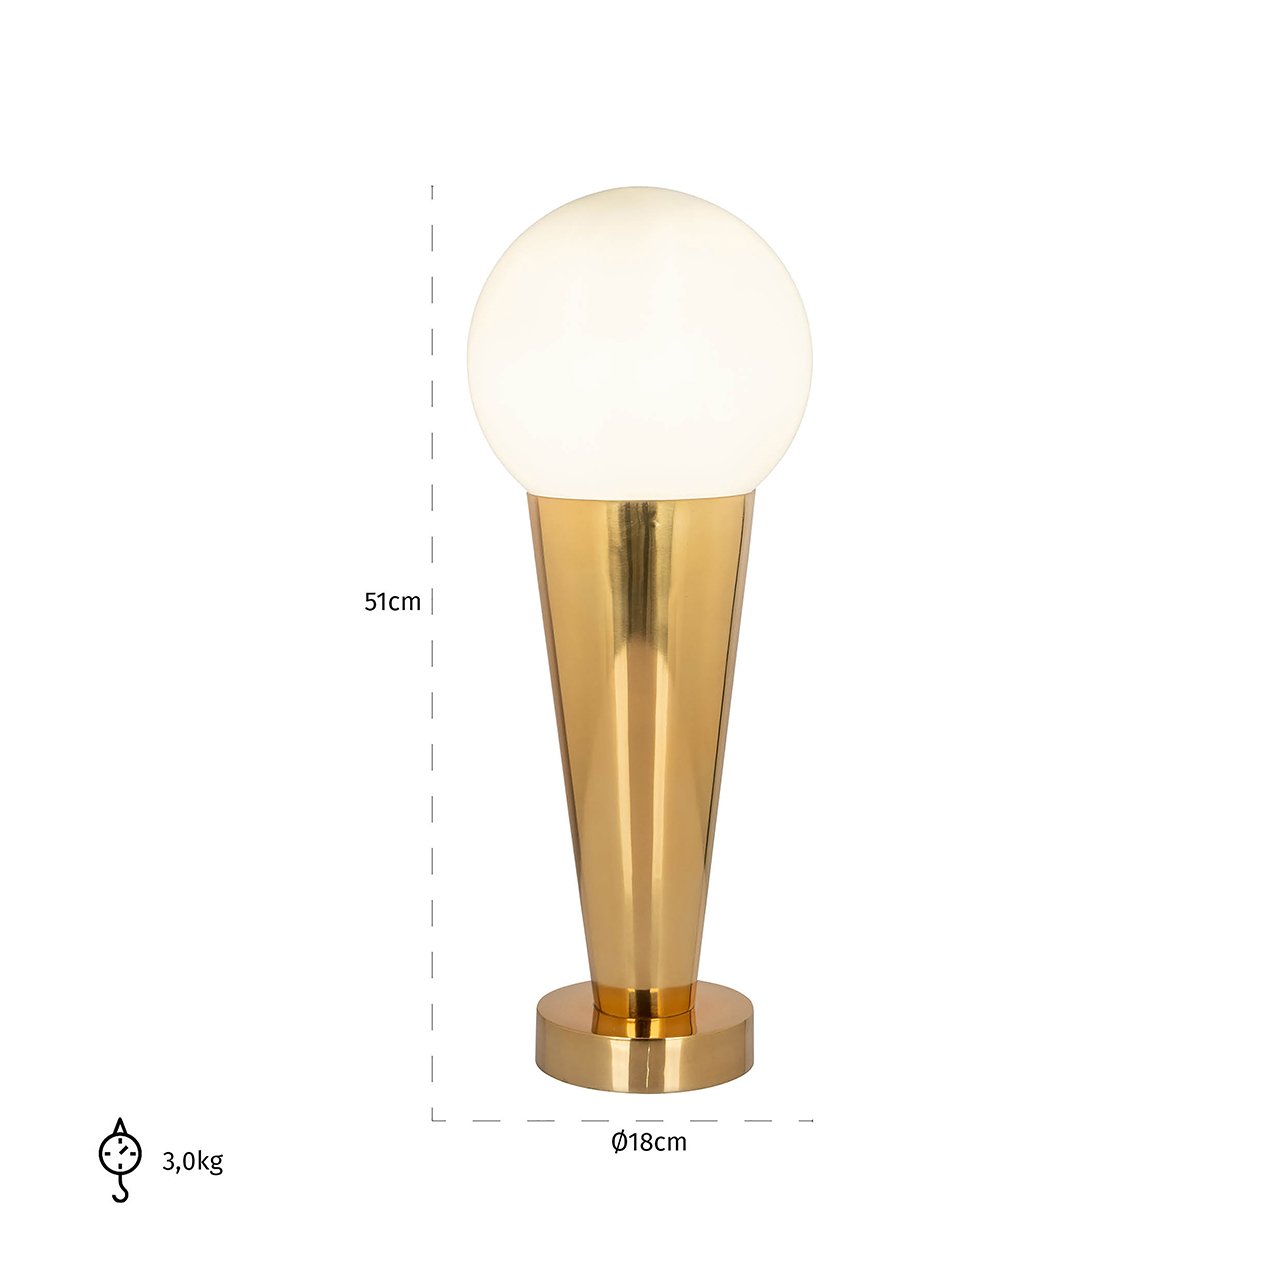 Richmond Tafellamp Cone 51cm hoog - Goud